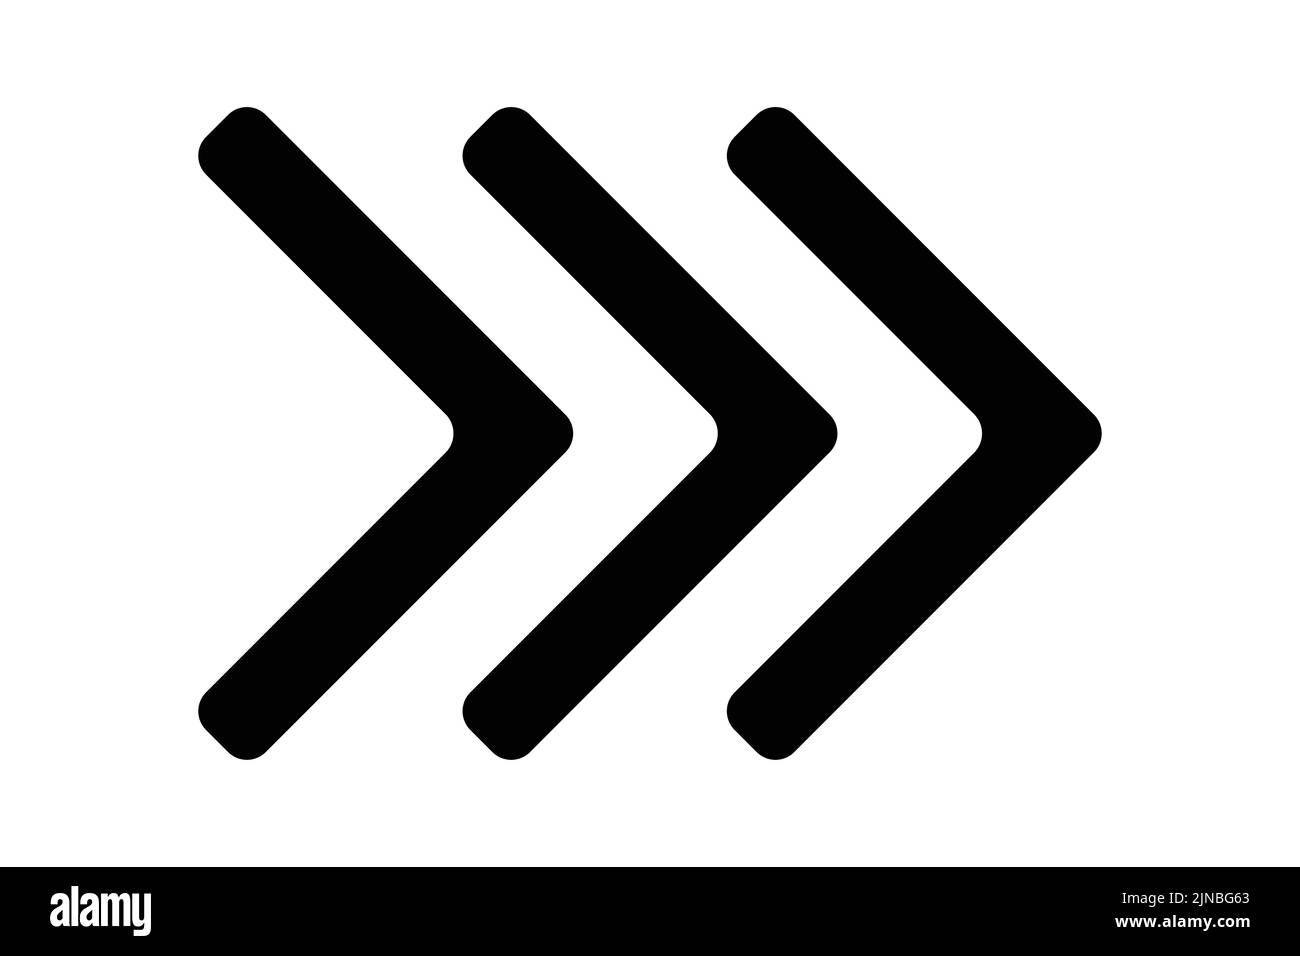 Fast forward play 3 arrows symbol sign icon - vector illustration Stock Vector